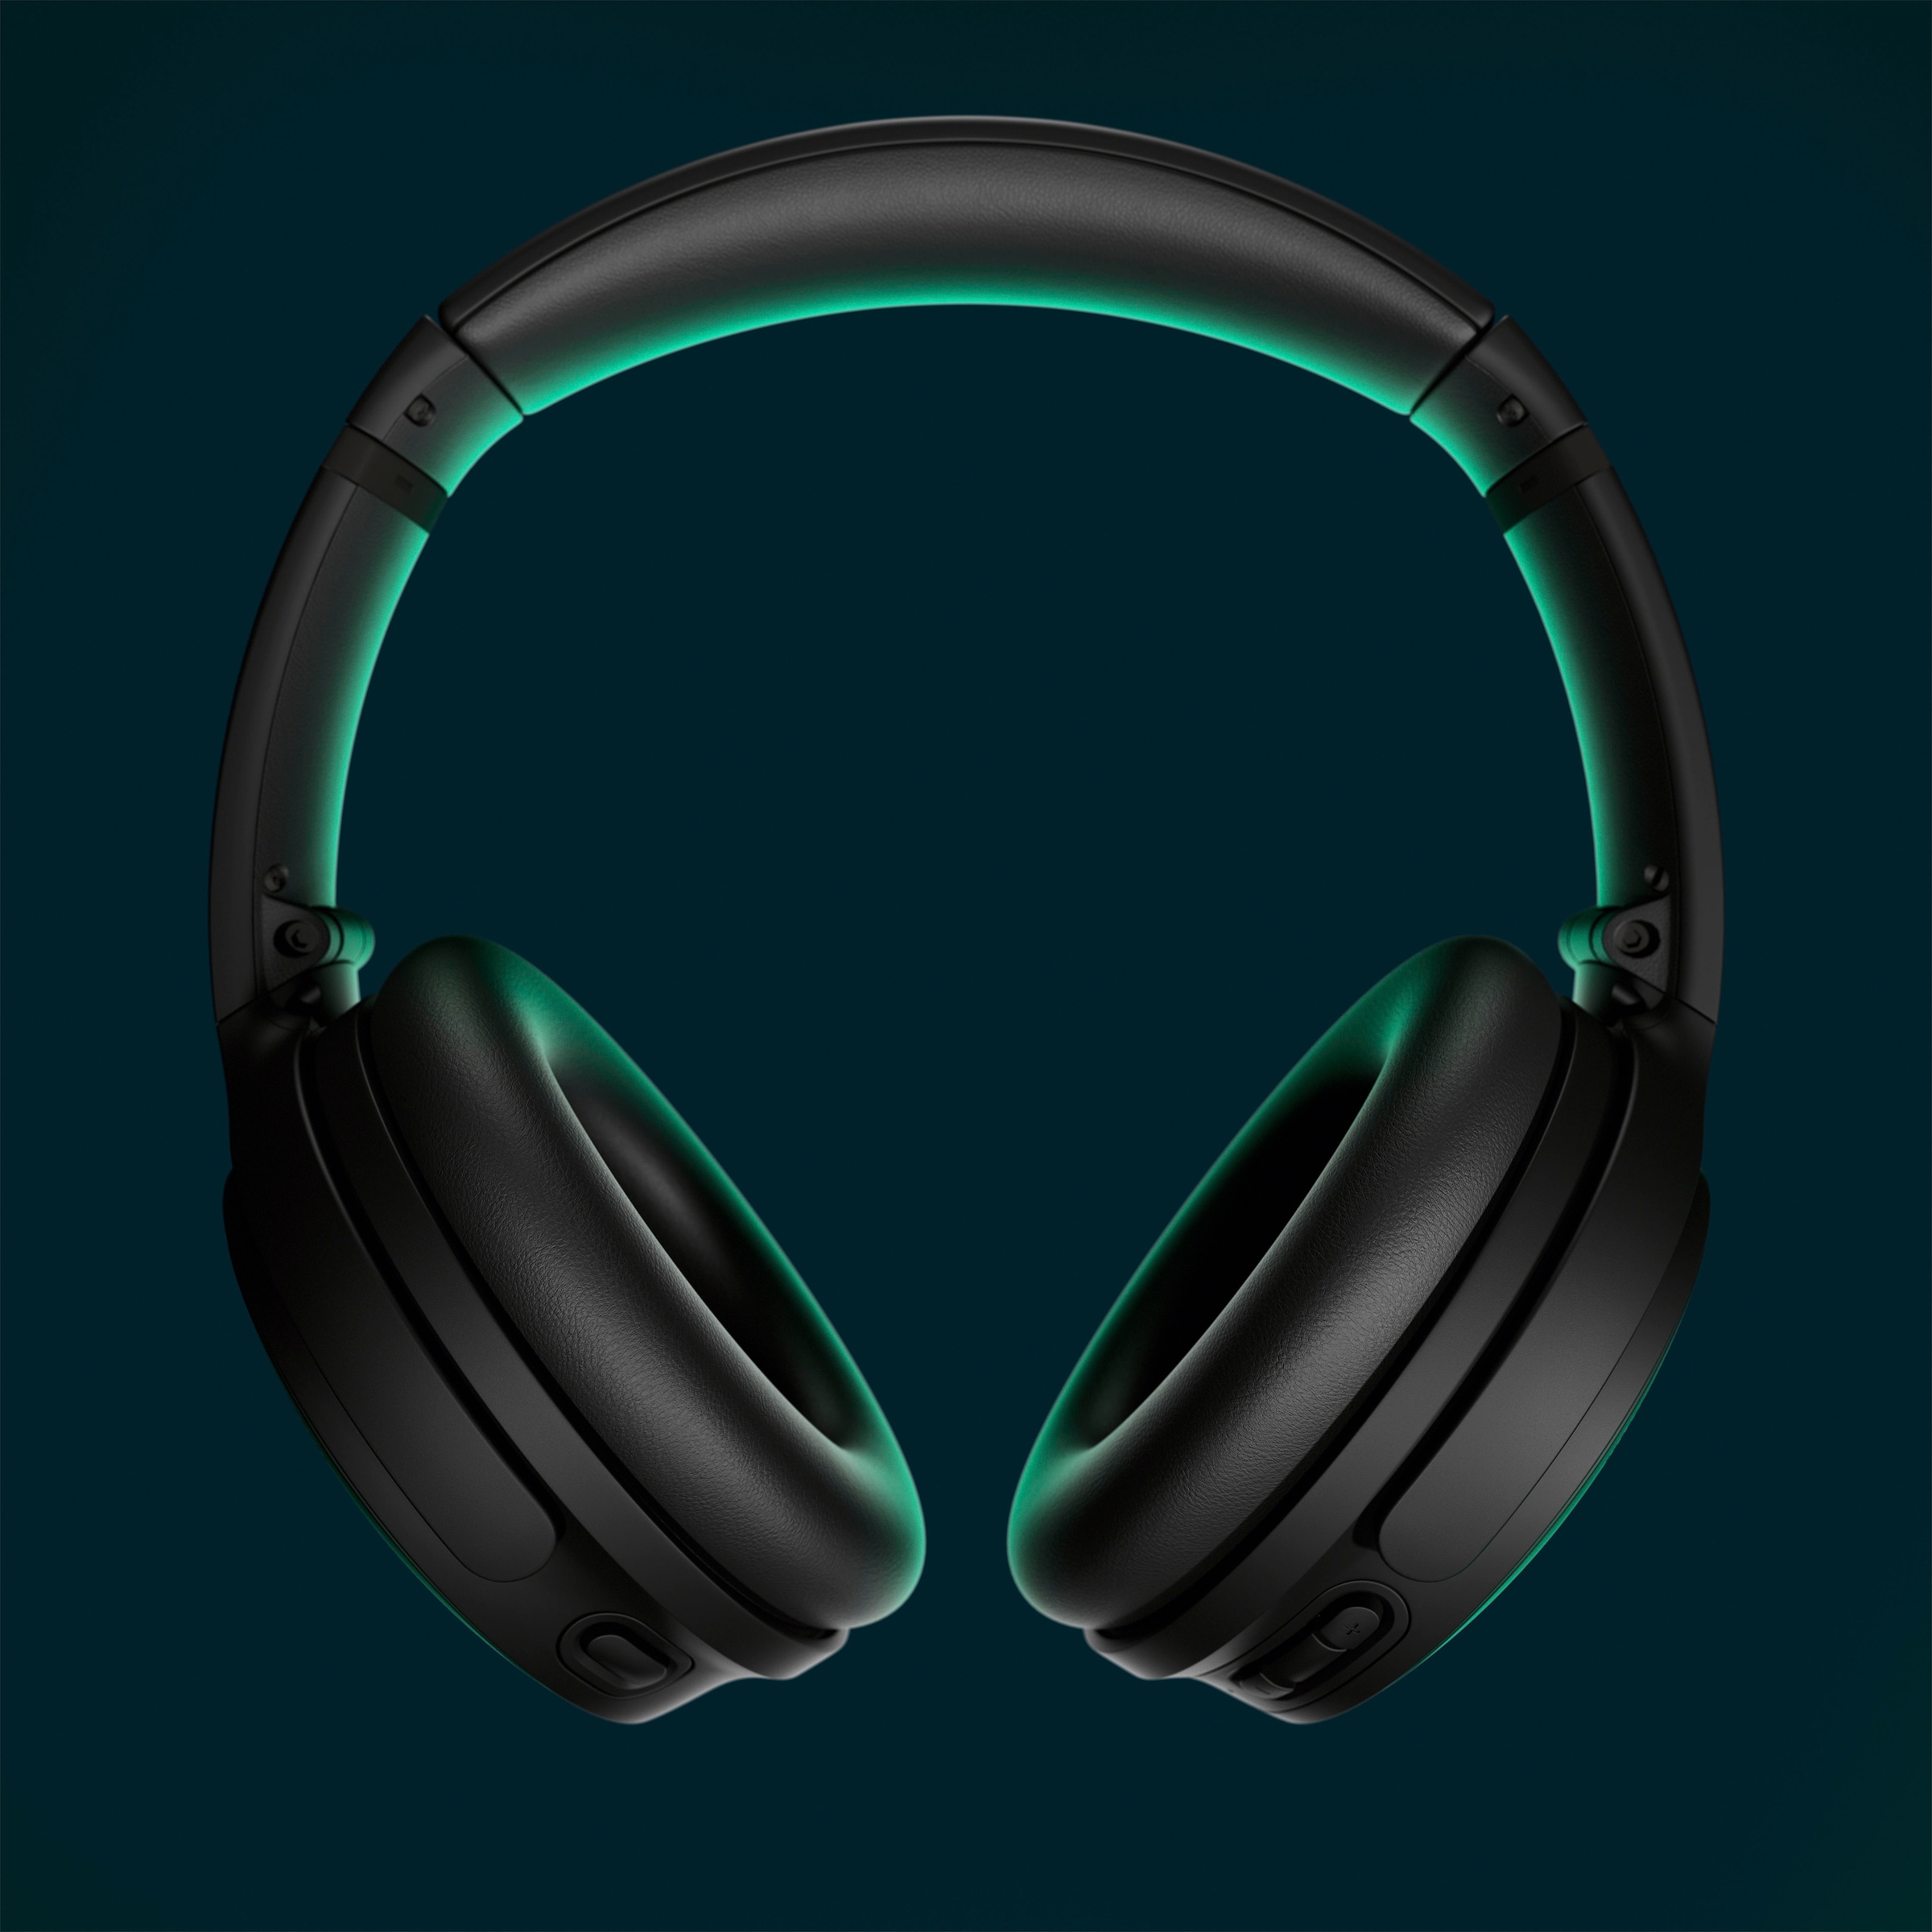 Bose Over-Ear-Kopfhörer »QuietComfort Noise Cancelling Kopfhörer«, Bluetooth, Rauschunterdrückung, 2 Modi, SimpleSync™-Technologie, inkl. Transportetui